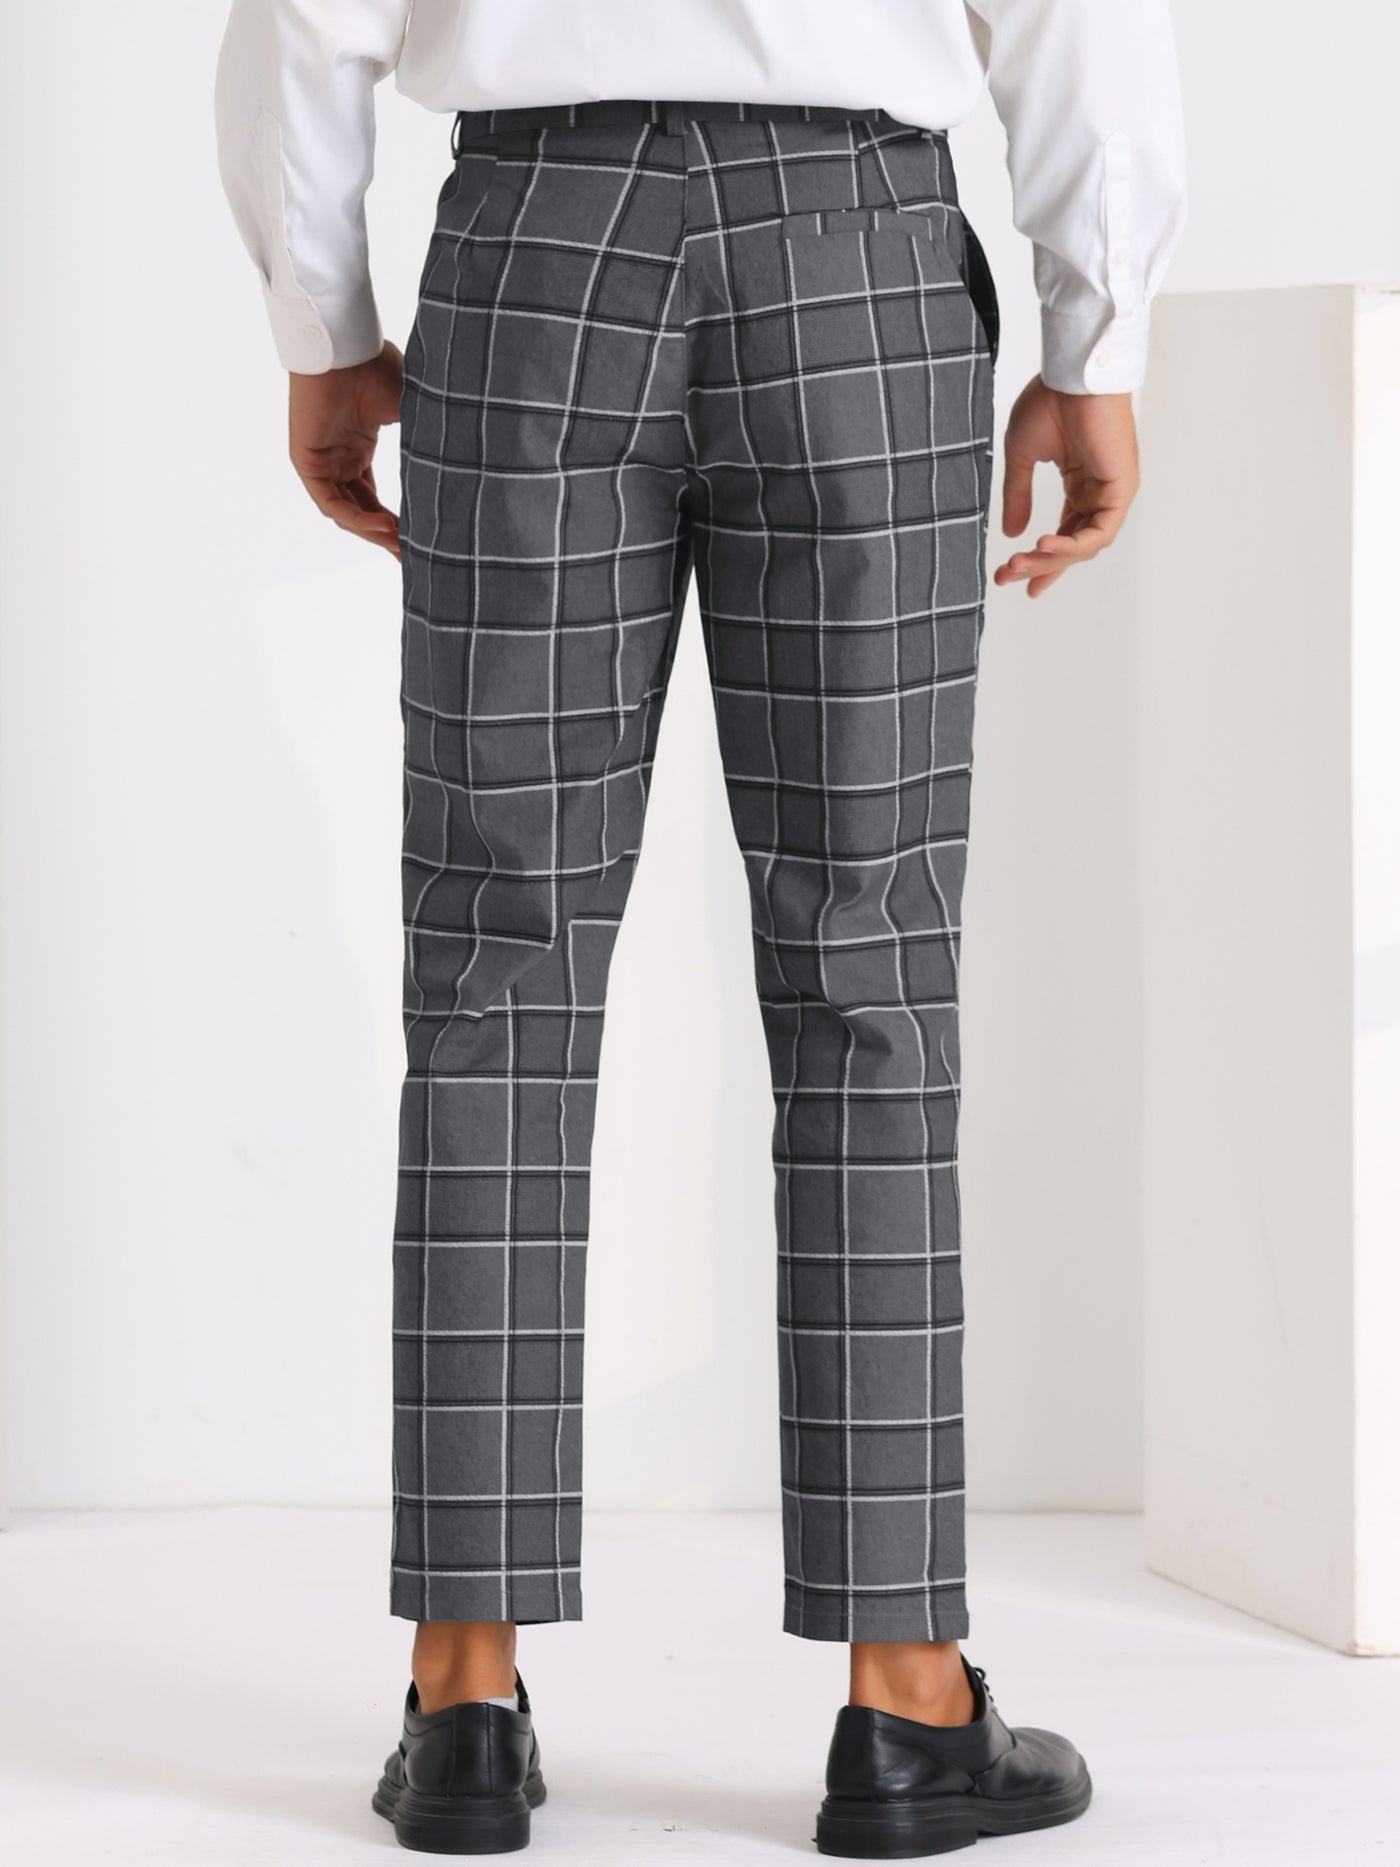 Lars Amadeus Polka Dots Dress Pants for Men's Regular Fit Flat Front Formal  Printed Trousers